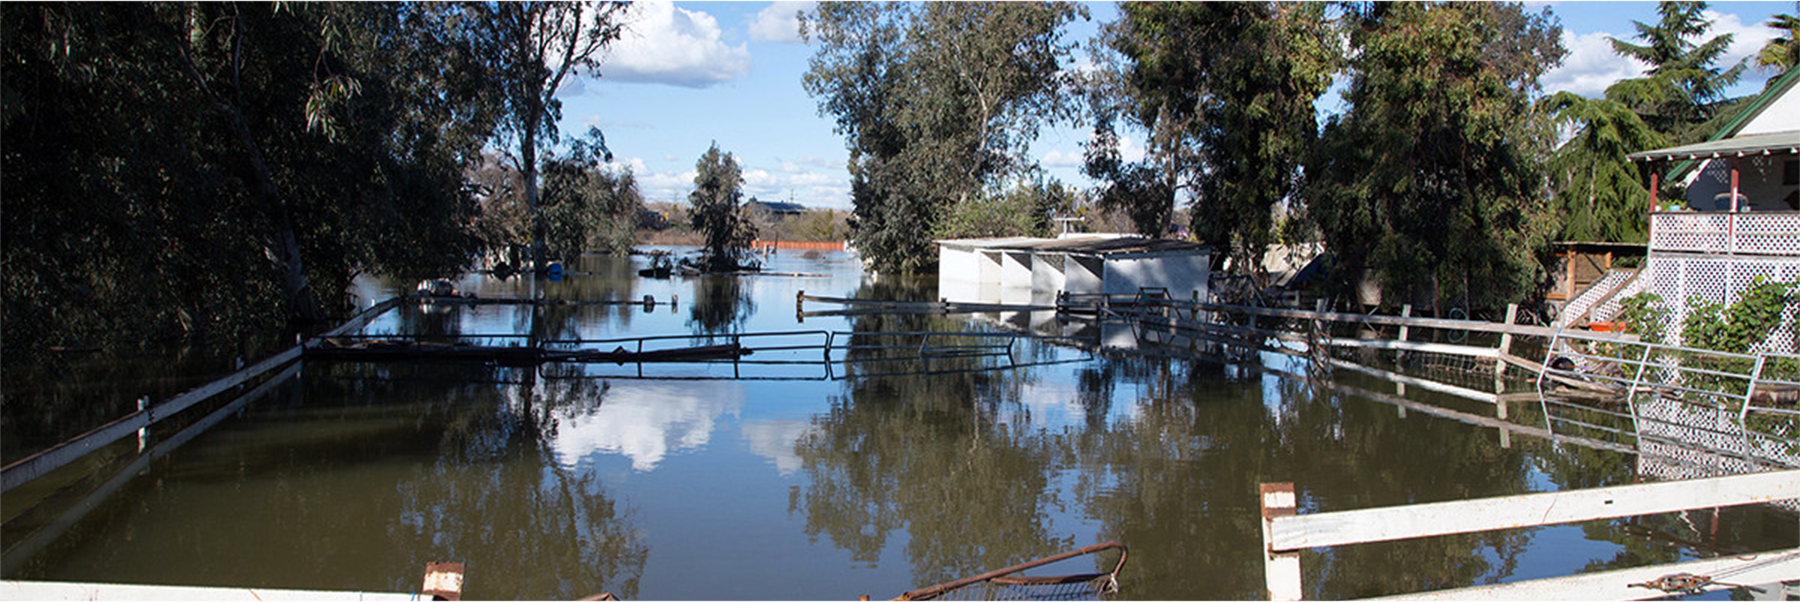 Flooding in Modesto, CA. Photo credit: Dale Kolke, CA-DWR